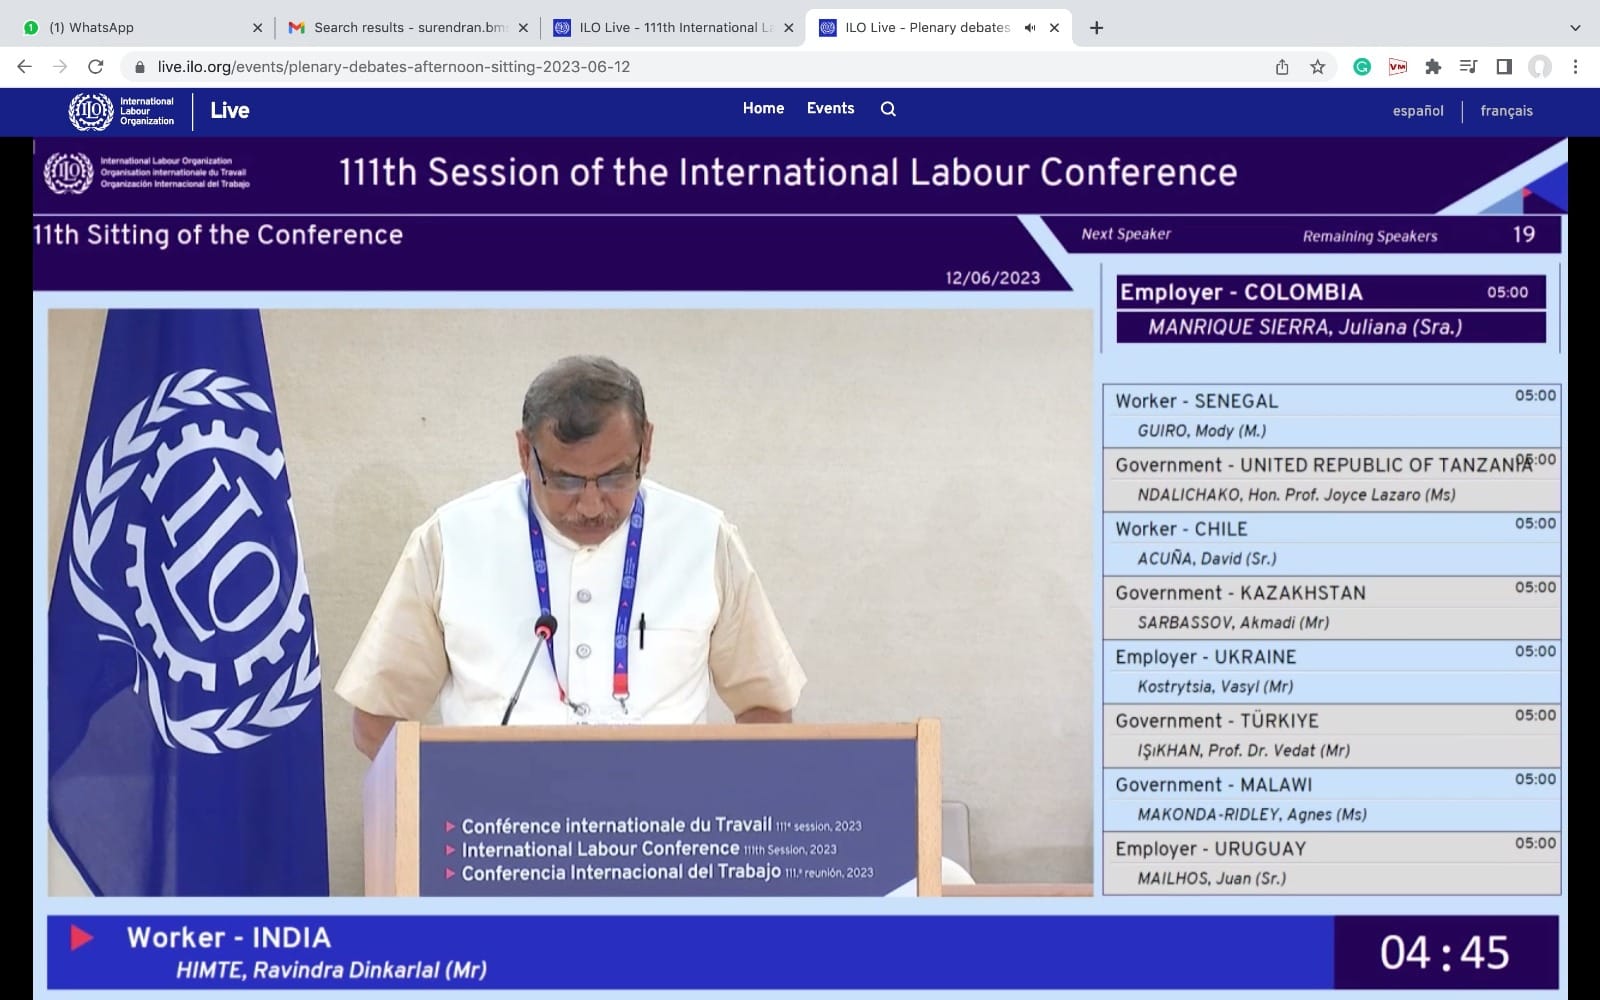 Shri Ravindra Himteji addressing at the Plenary session of the 111th ILC meeting at ILO Geneva on behalf of the WORKER’S OF INDIA.